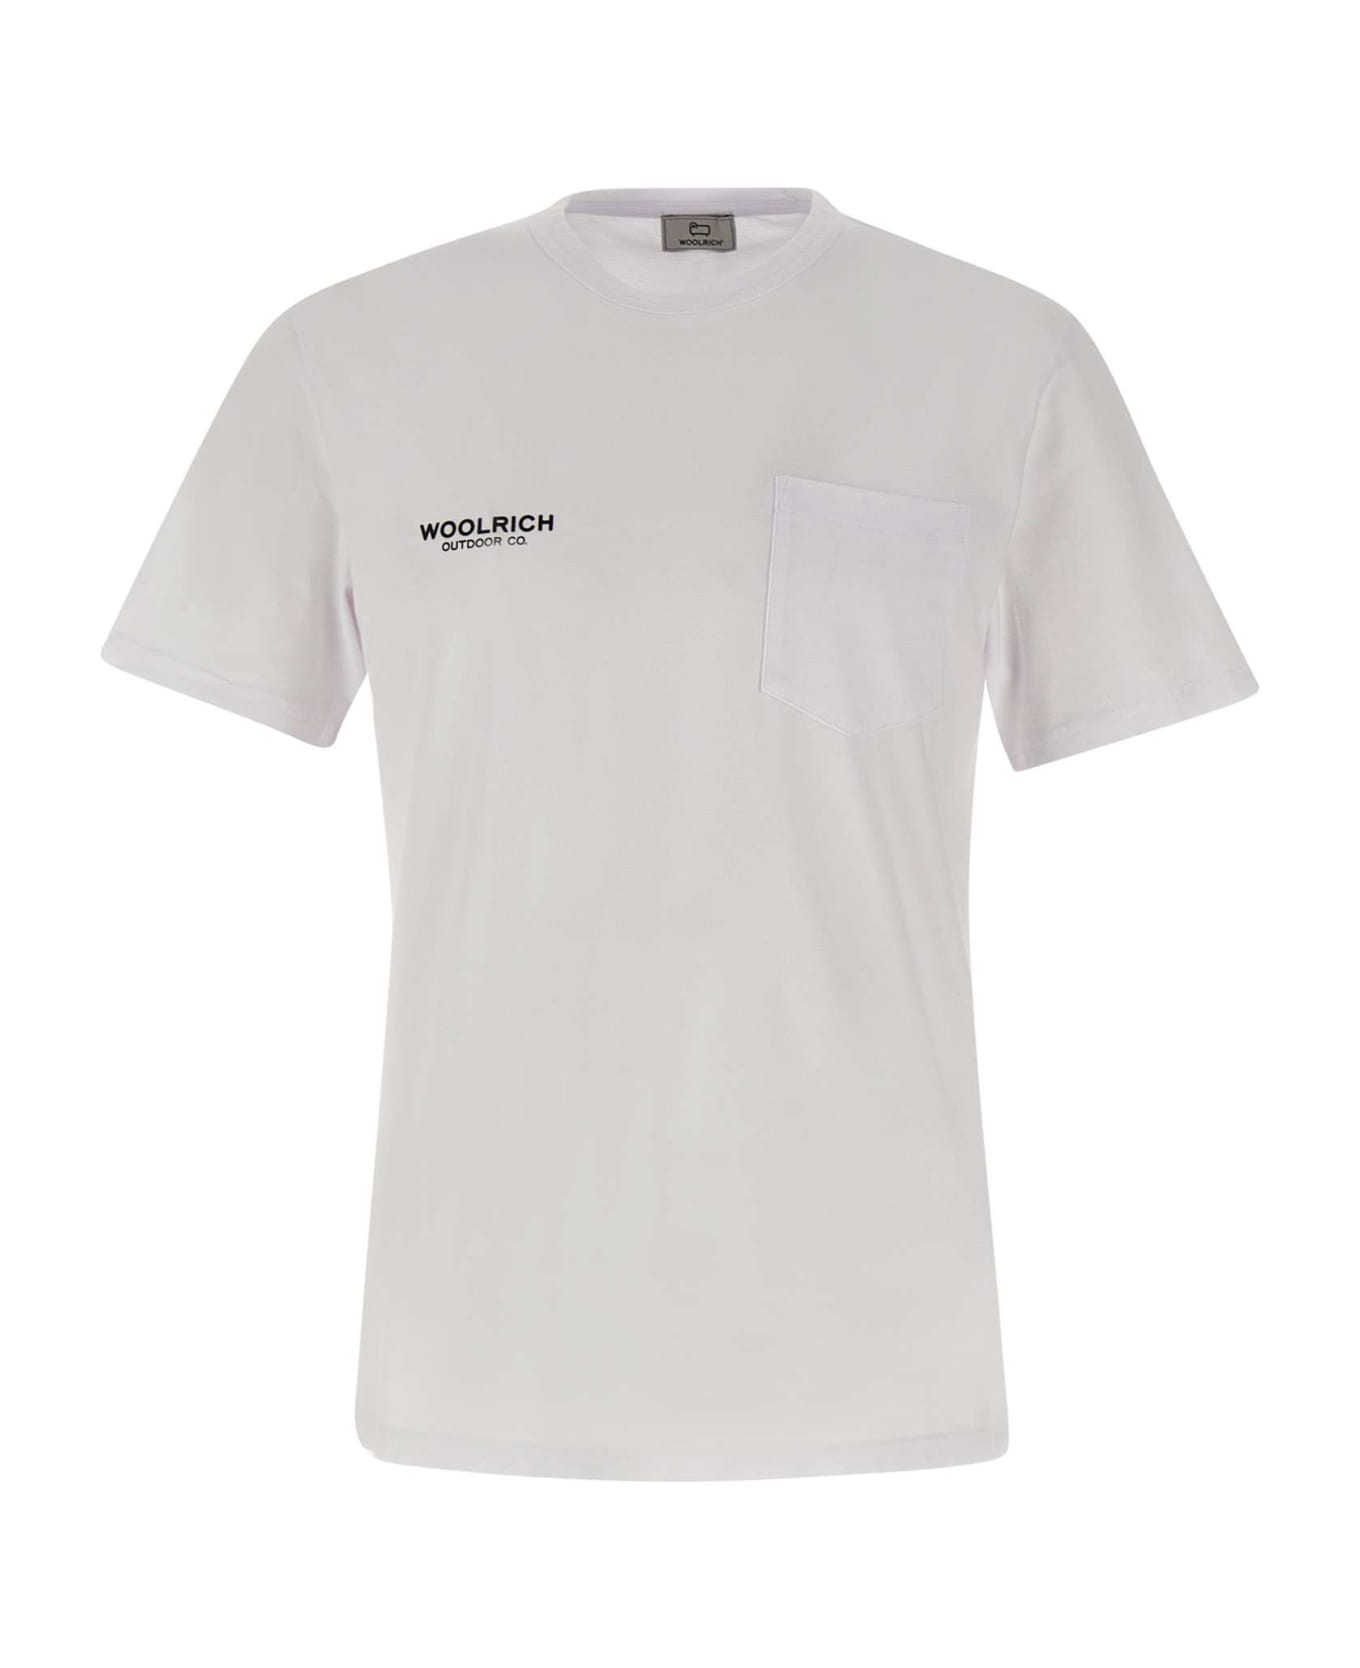 Woolrich "safari" Cotton T-shirt - WHITE